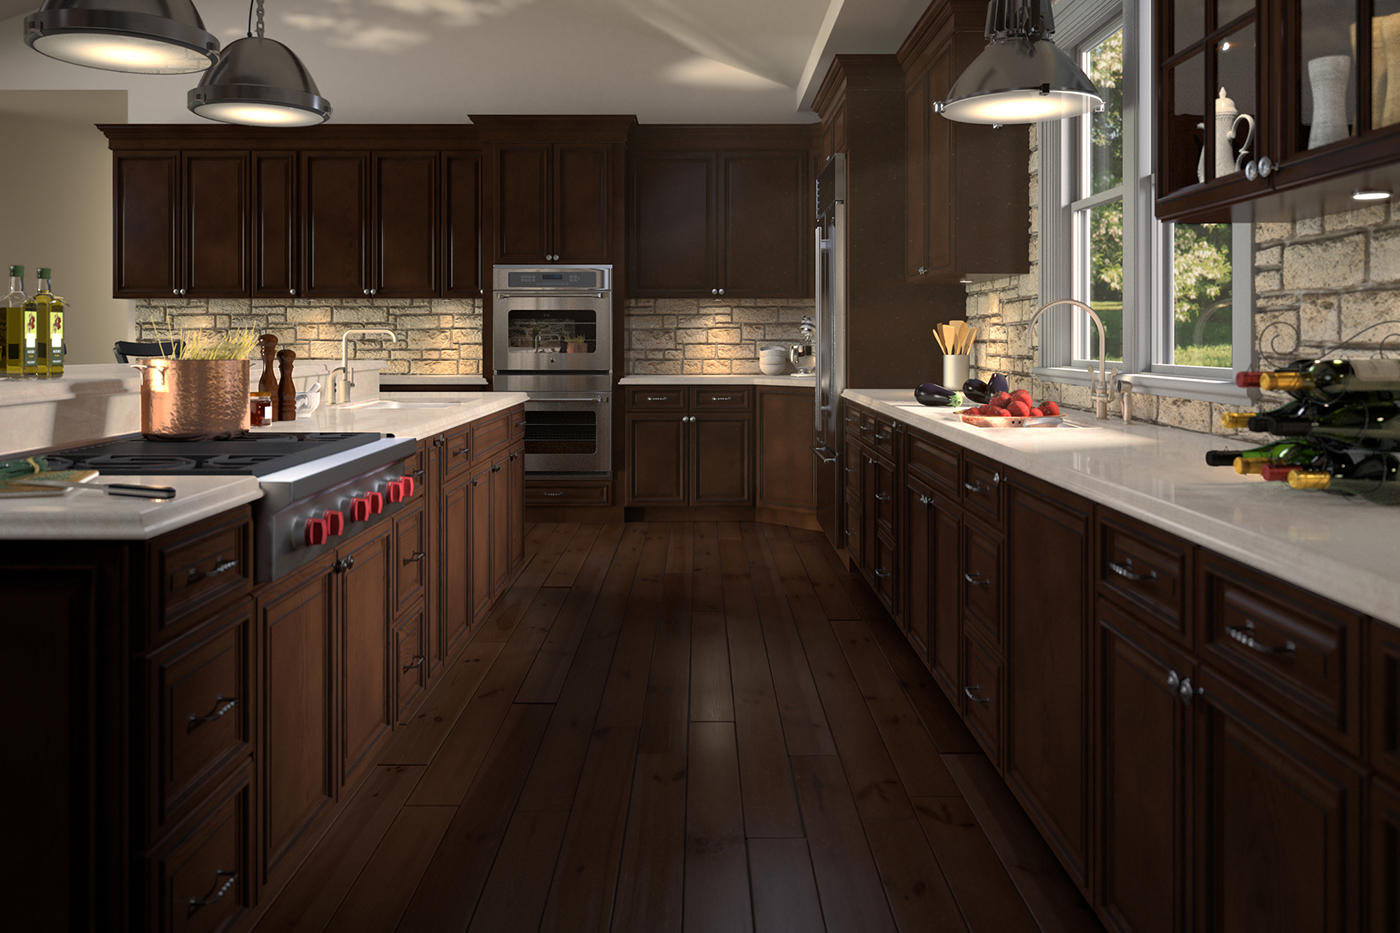 kitchen 3D CGI visualization rendering kitchen cgi Hypothetical INTERIOR RENDERING residential